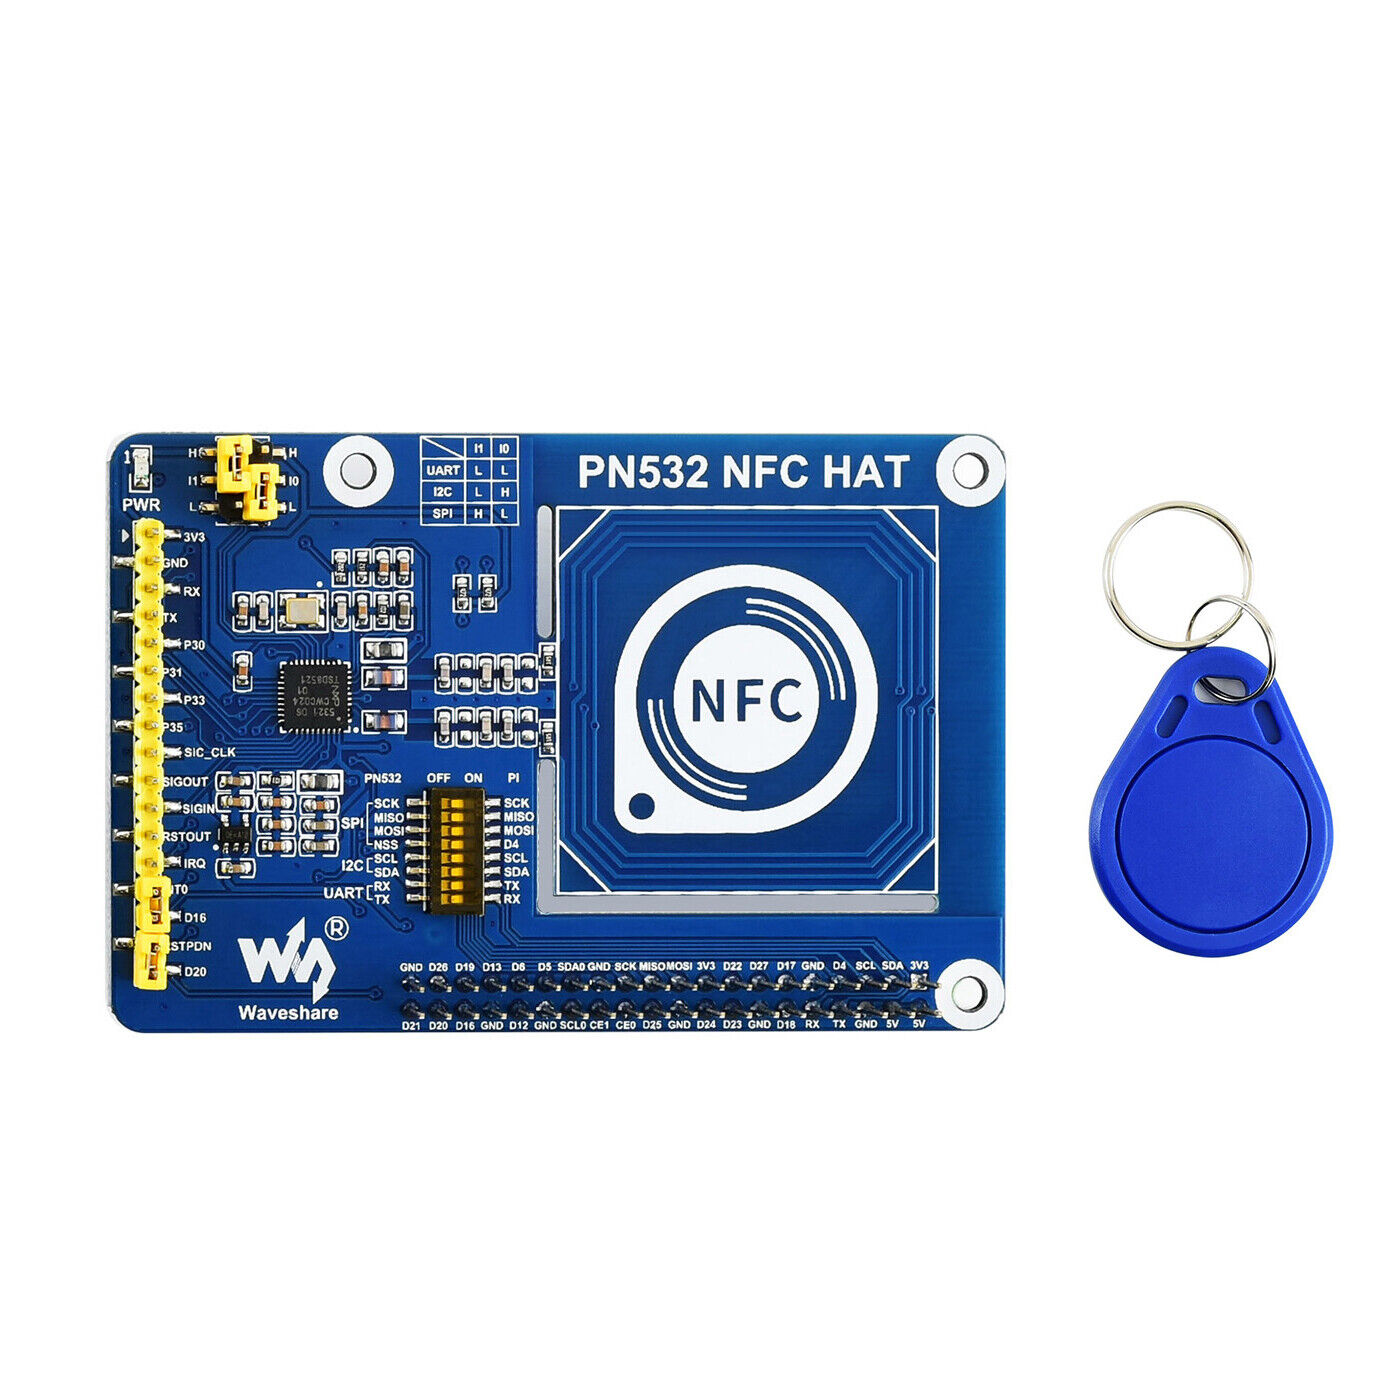 3.3V/5V 13.56MHz NFC PN532 HAT Expansion Board for Raspberry Pi Zero 2 W 3 B 4 5